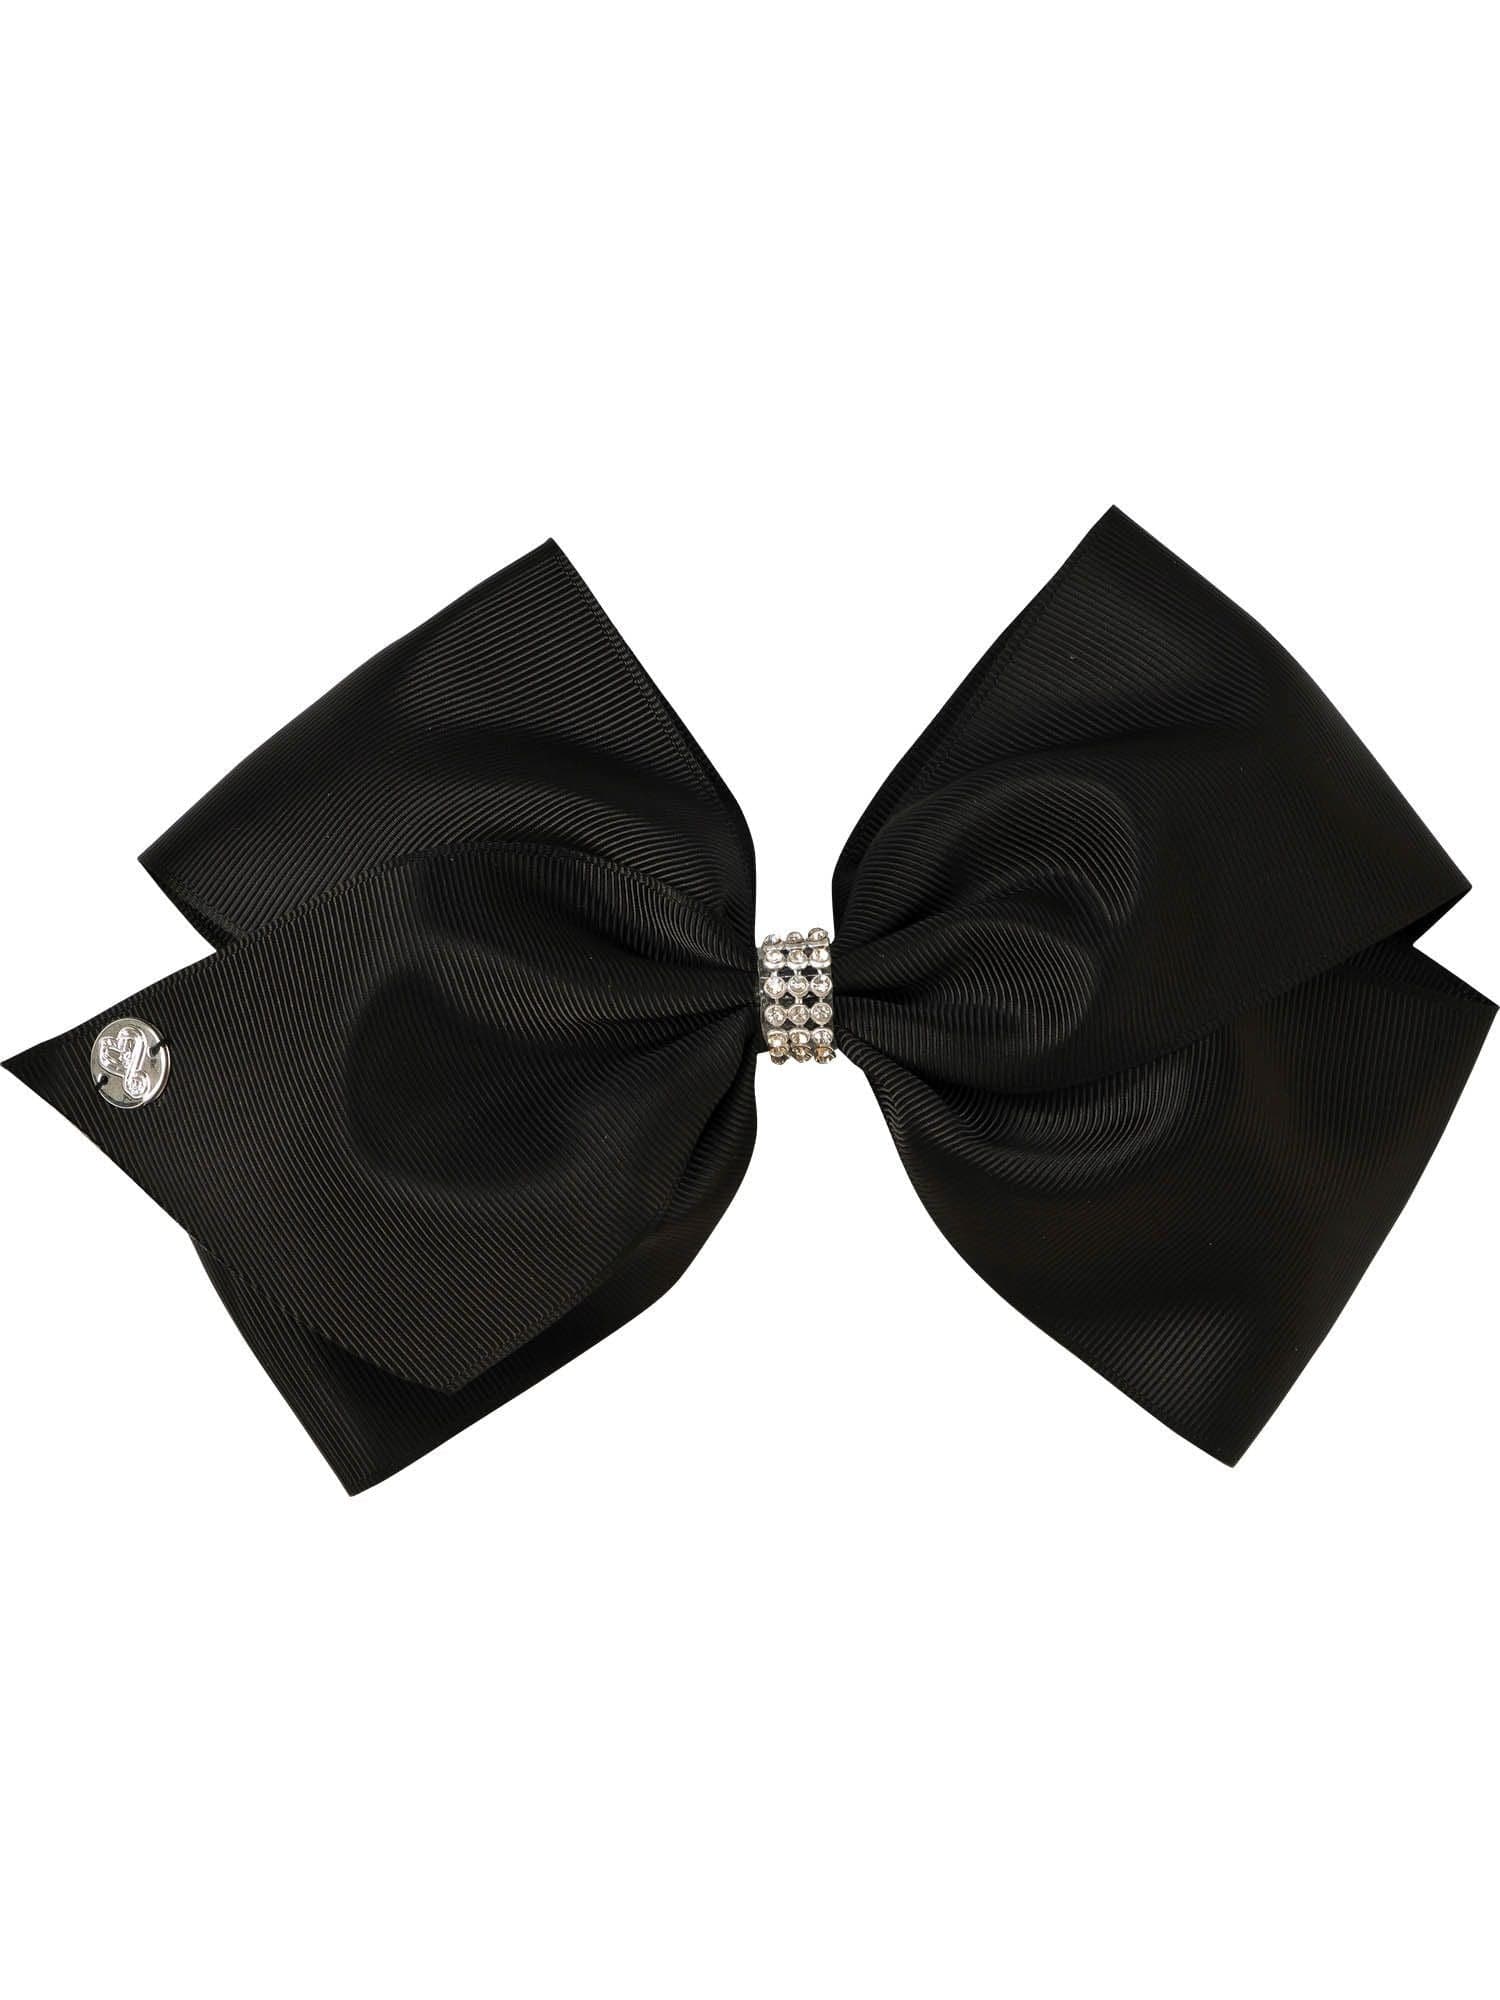 Girls' JoJo Siwa Black Hair Bow - costumes.com